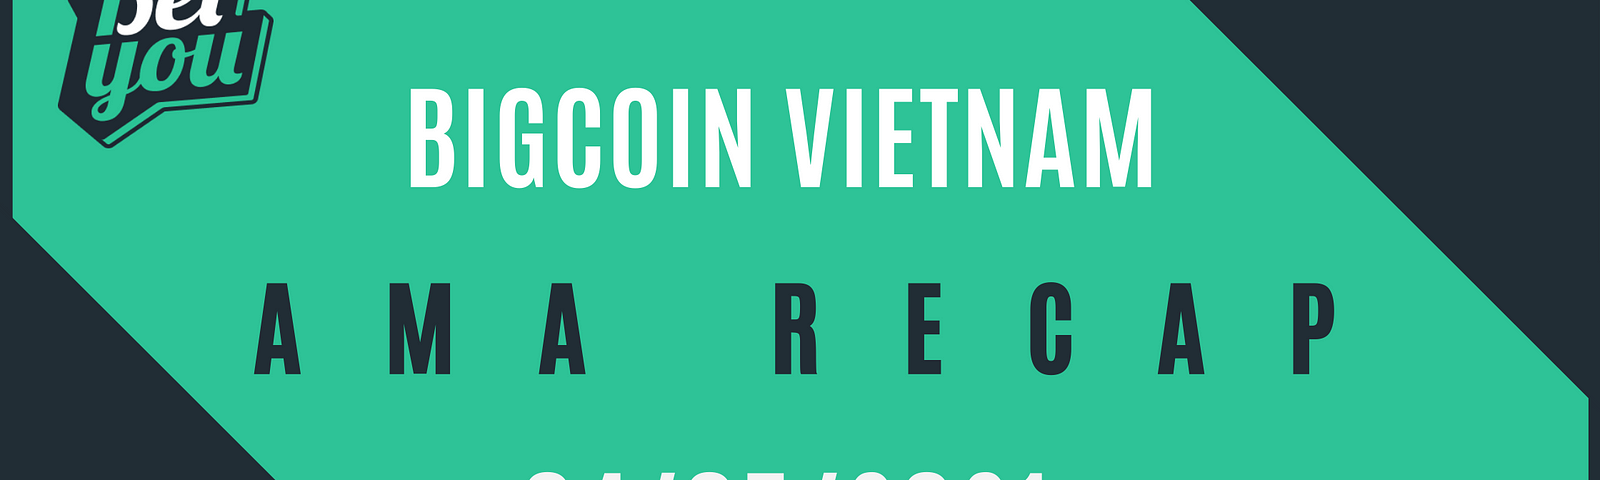 BigCoin Vietnam AMA recap